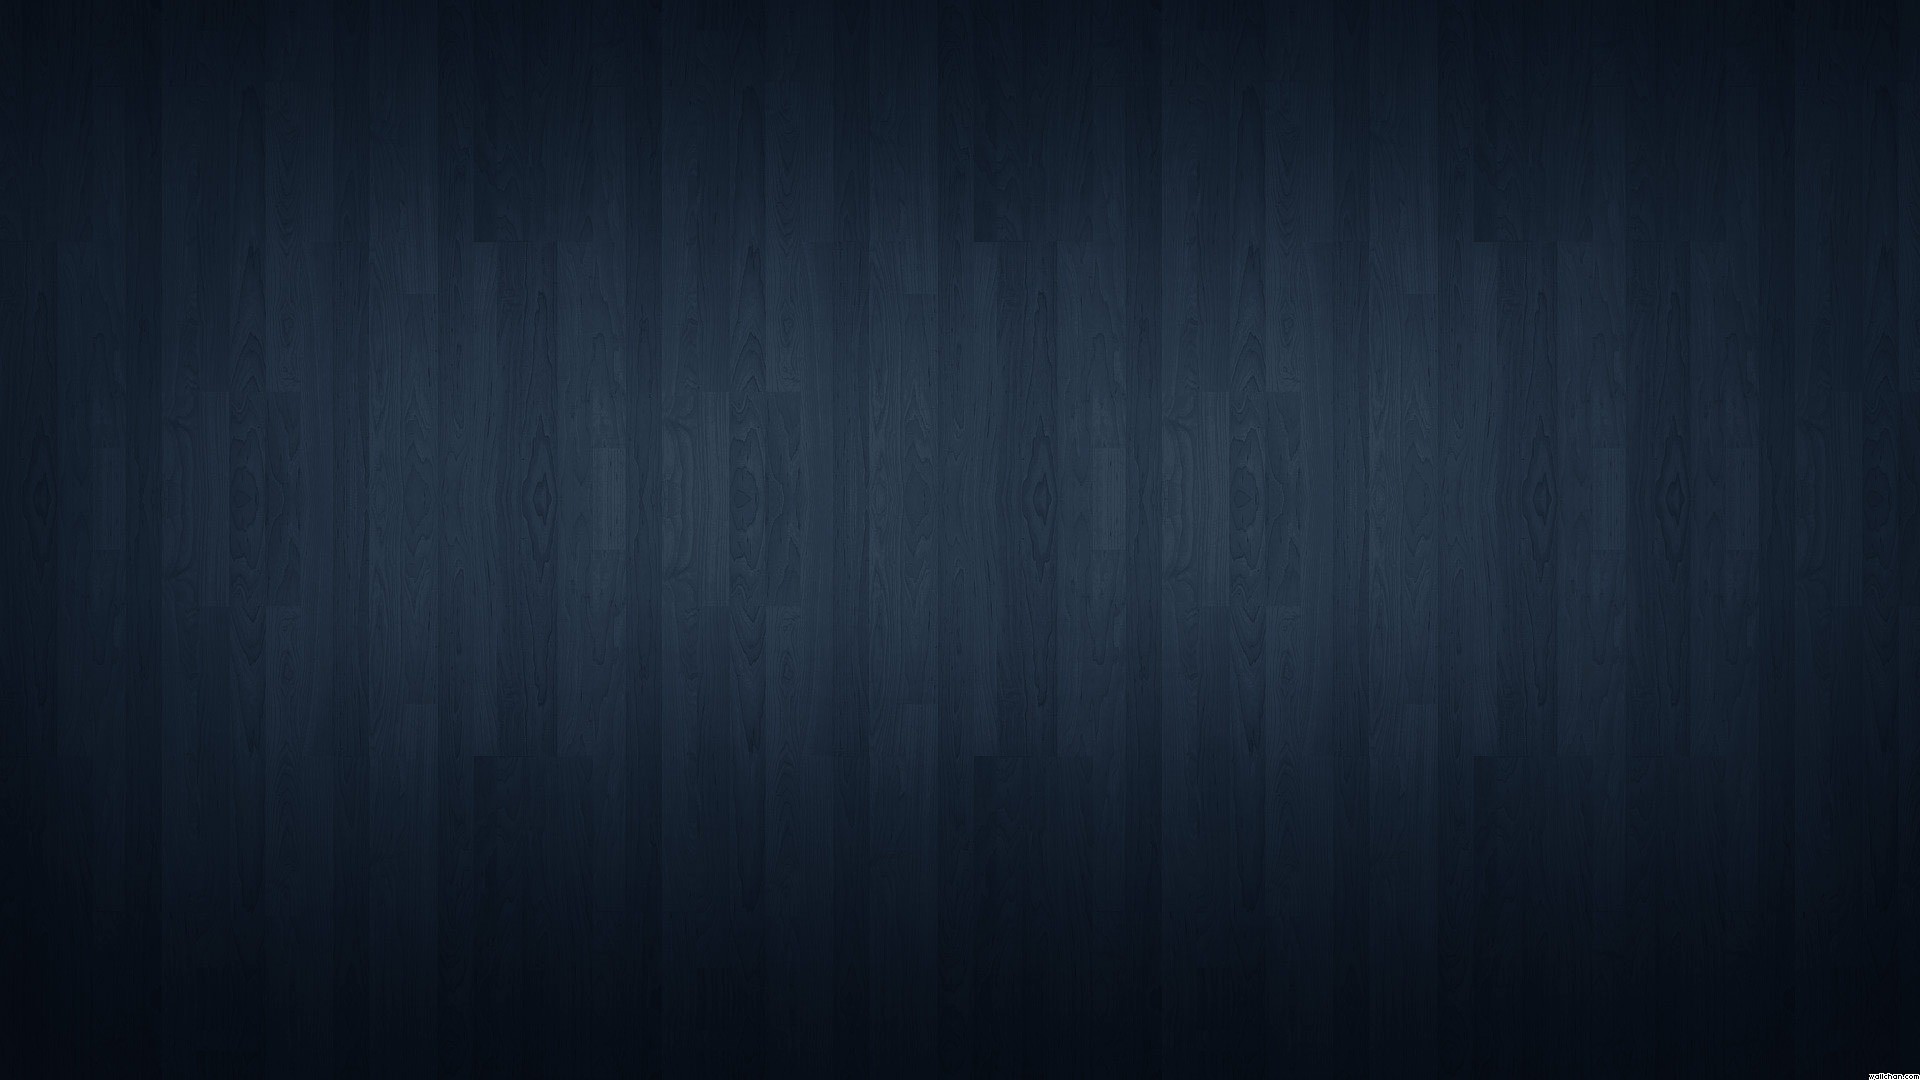 1920x1080, Popular Dark Hardwood Floor Wallpaper Dark - Black Hardwood Floor Background - HD Wallpaper 